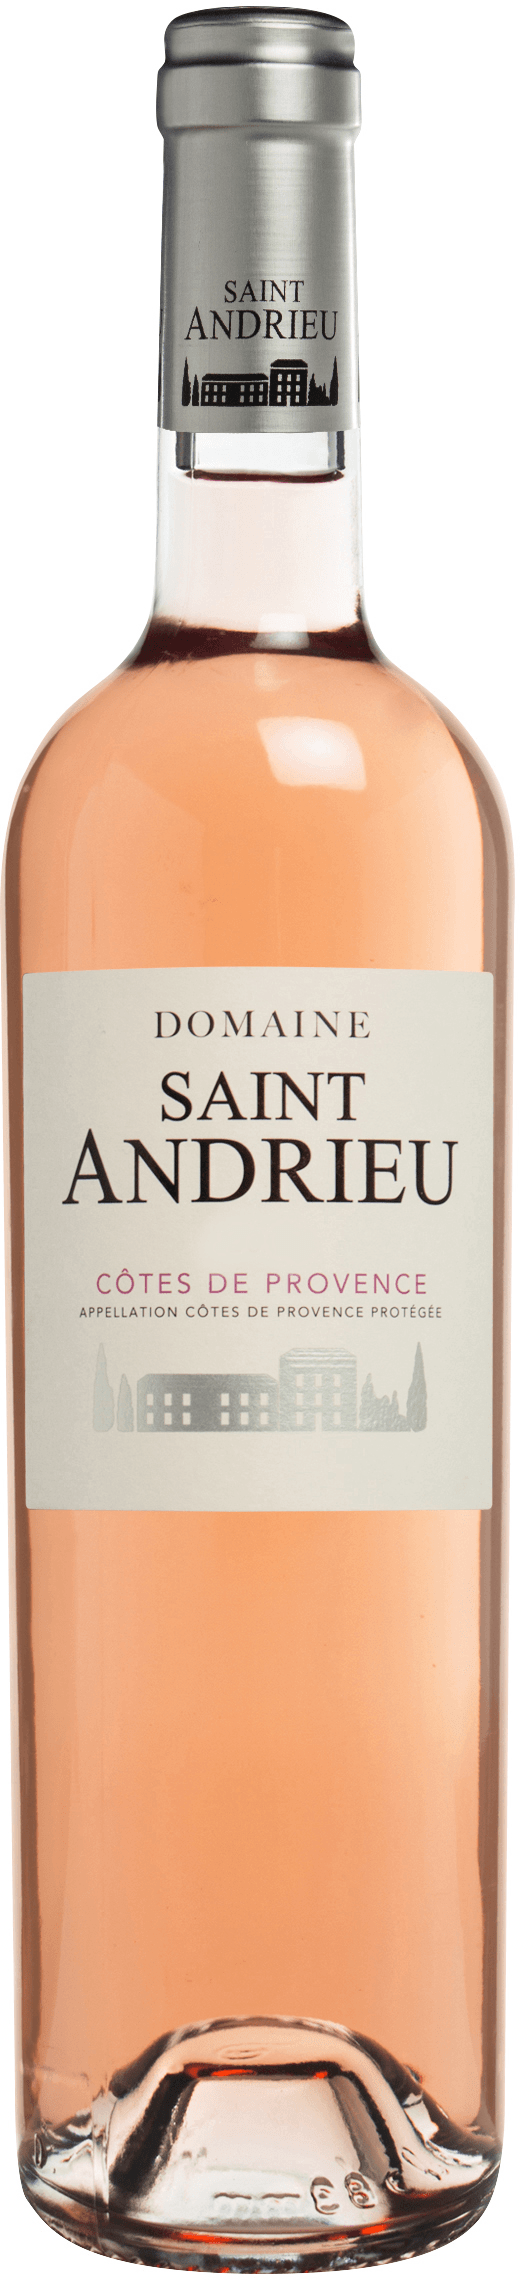 Domaine saint andrieu ros 2019  Ctes de Provence, Provence